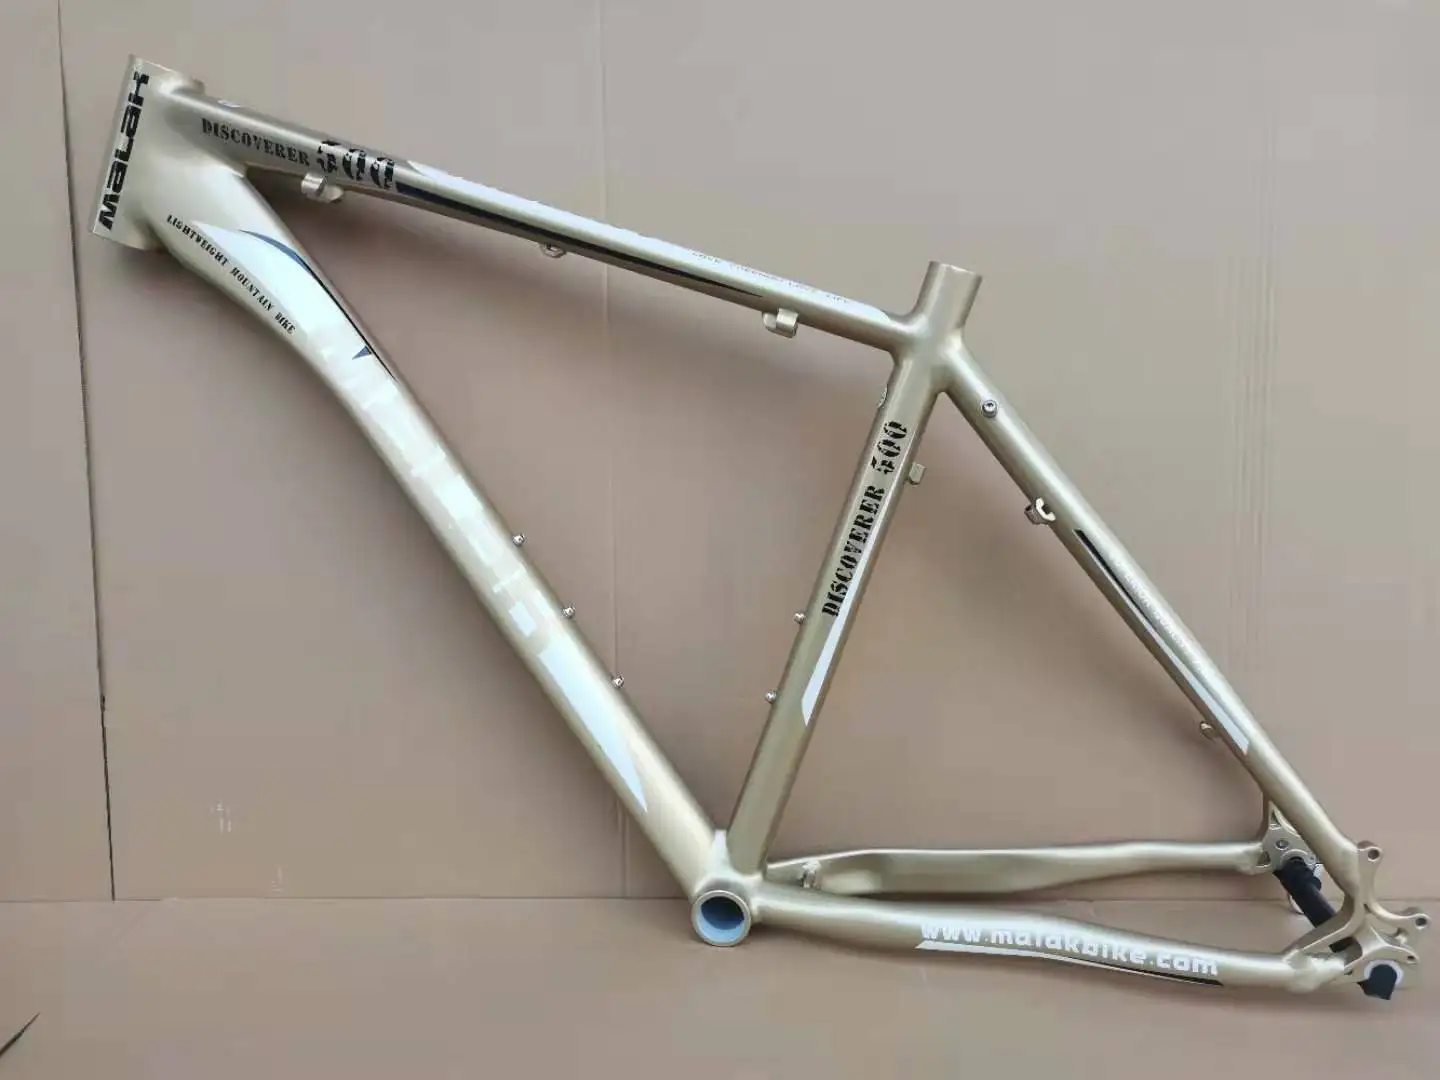 US $150.99 Last bicycle frame 26er super light 1760g alloy aluminum mountain bike MTB frame 26X1819 for disc brake mount parts